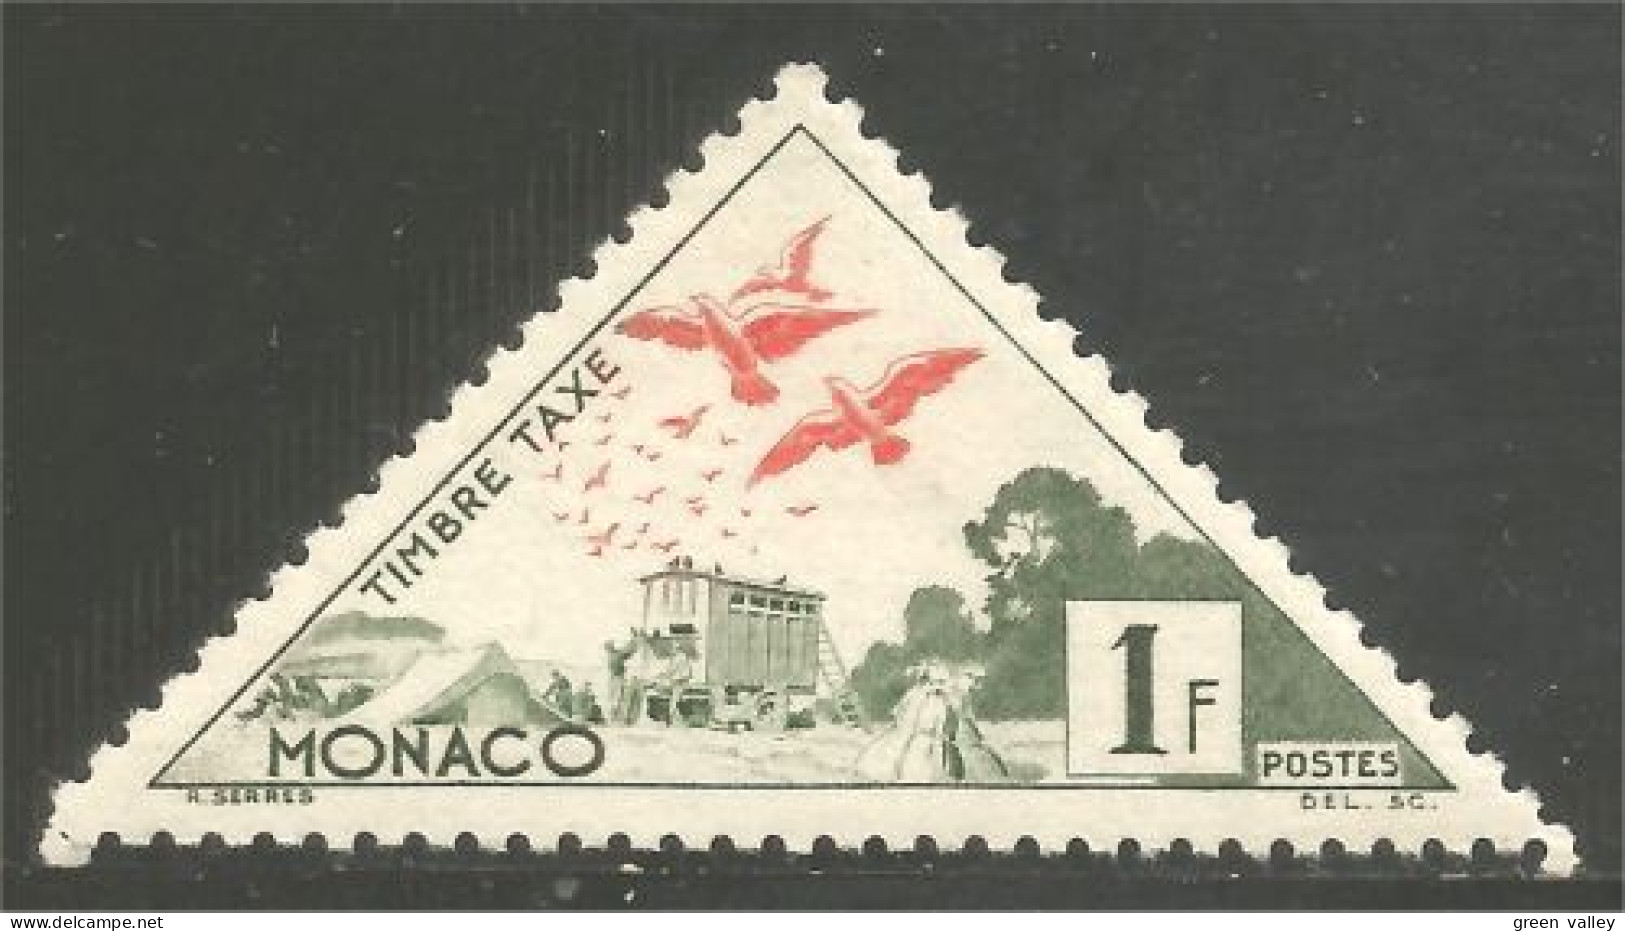 630 Monaco Taxe 1953 Carrier Pigeons Voyageurs Brieftauben Piccioni Tauben MH * Neuf (MON-441) - Tauben & Flughühner